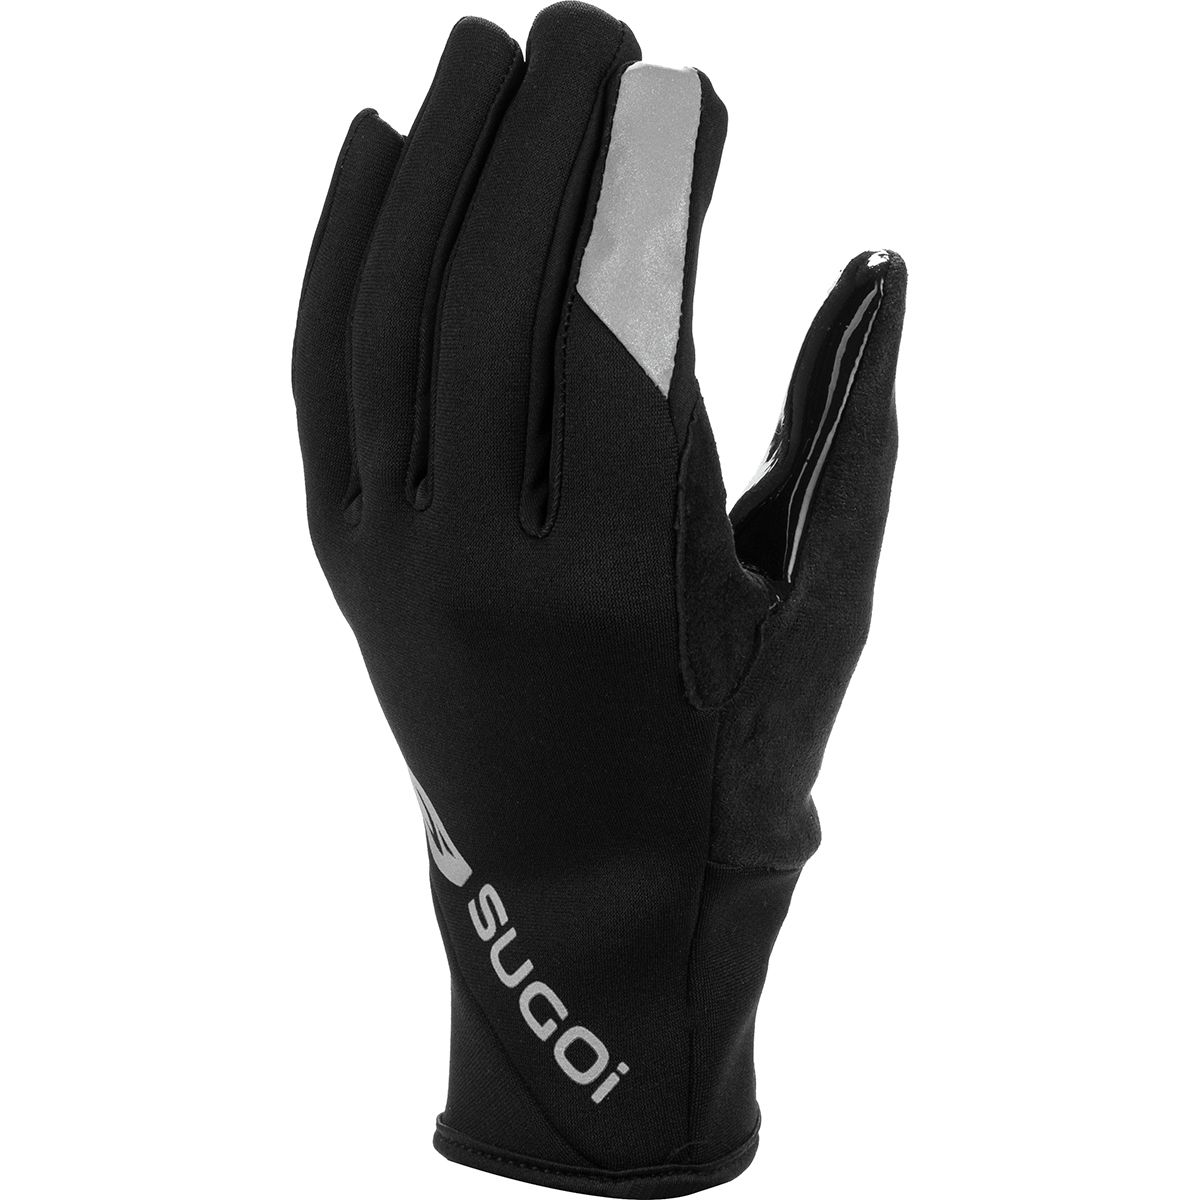 SUGOi Resistor Glove - Men's